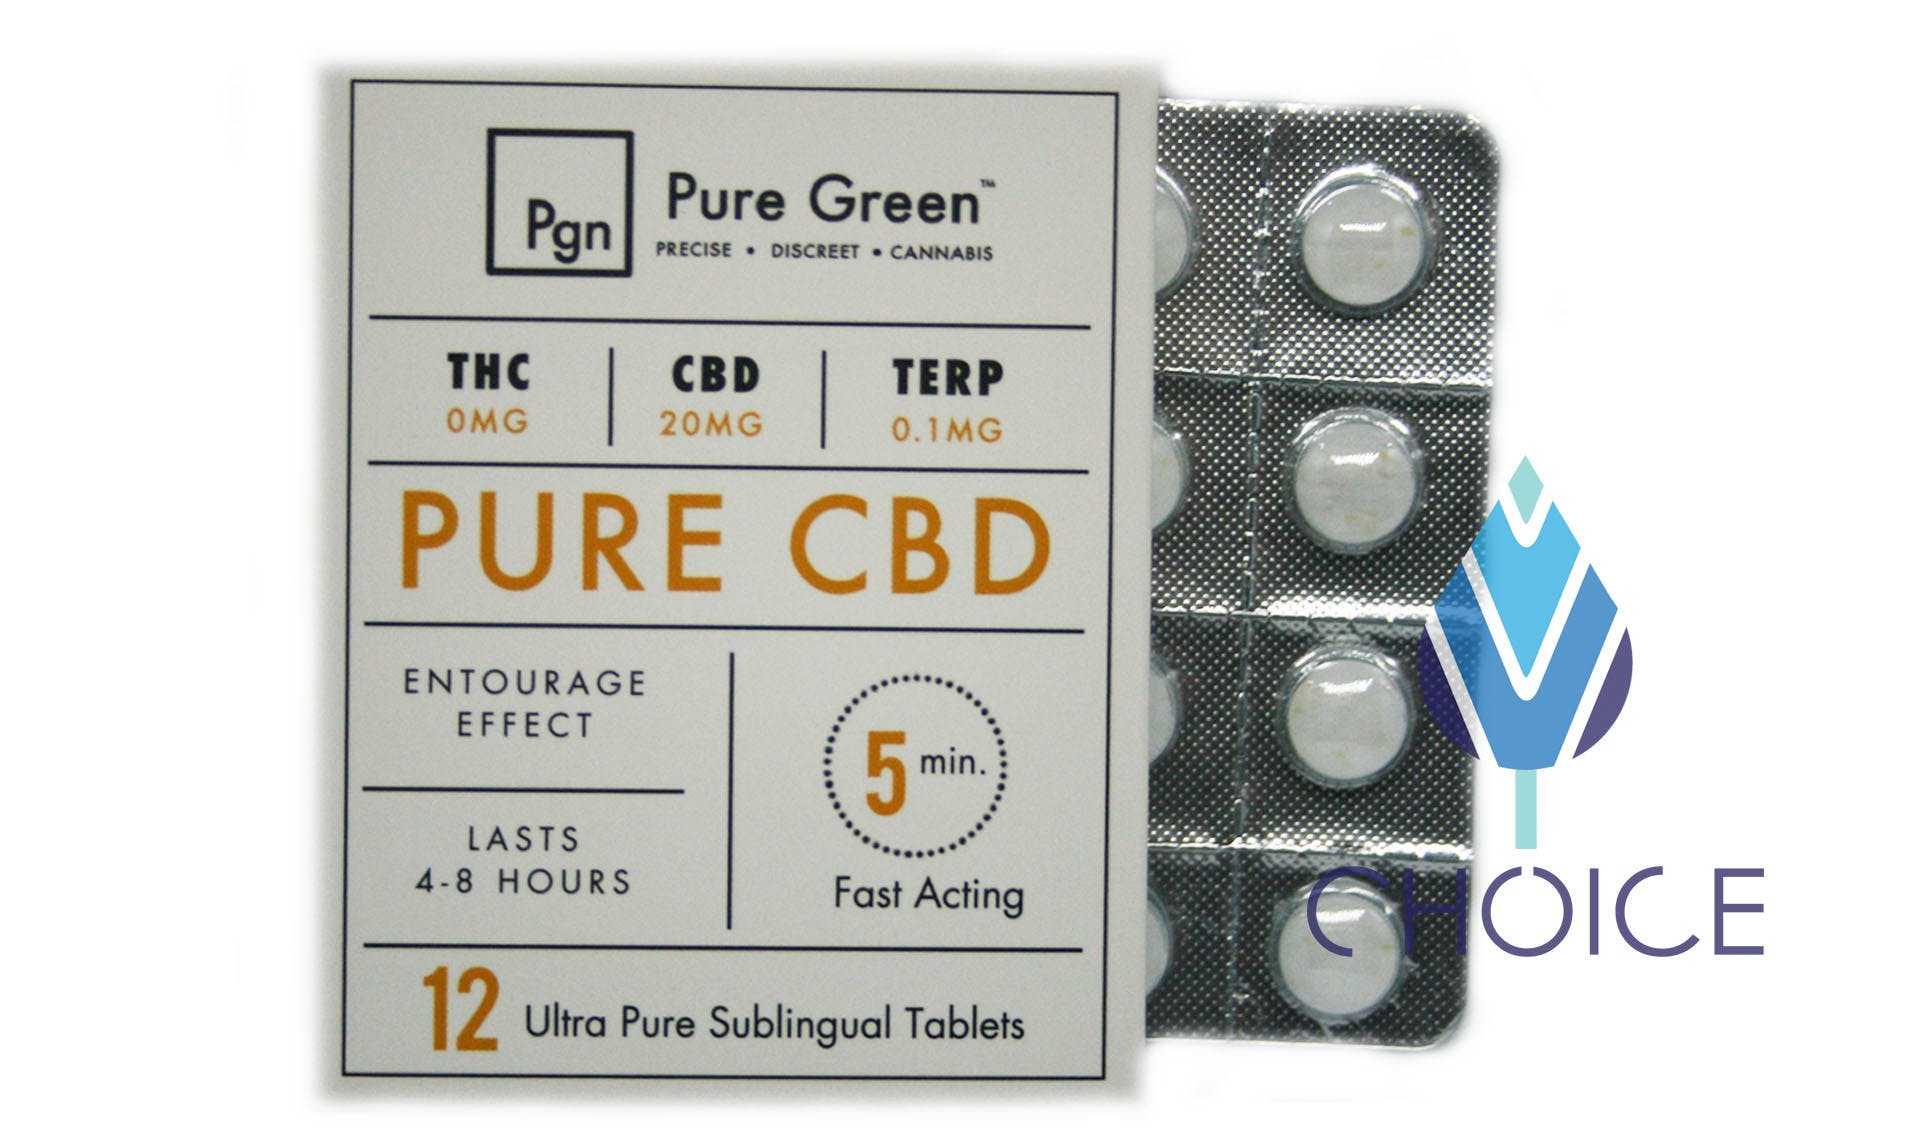 marijuana-dispensaries-choice-exit-145-in-jackson-12-pk-pure-cbd-cbd-tablets-by-pure-green